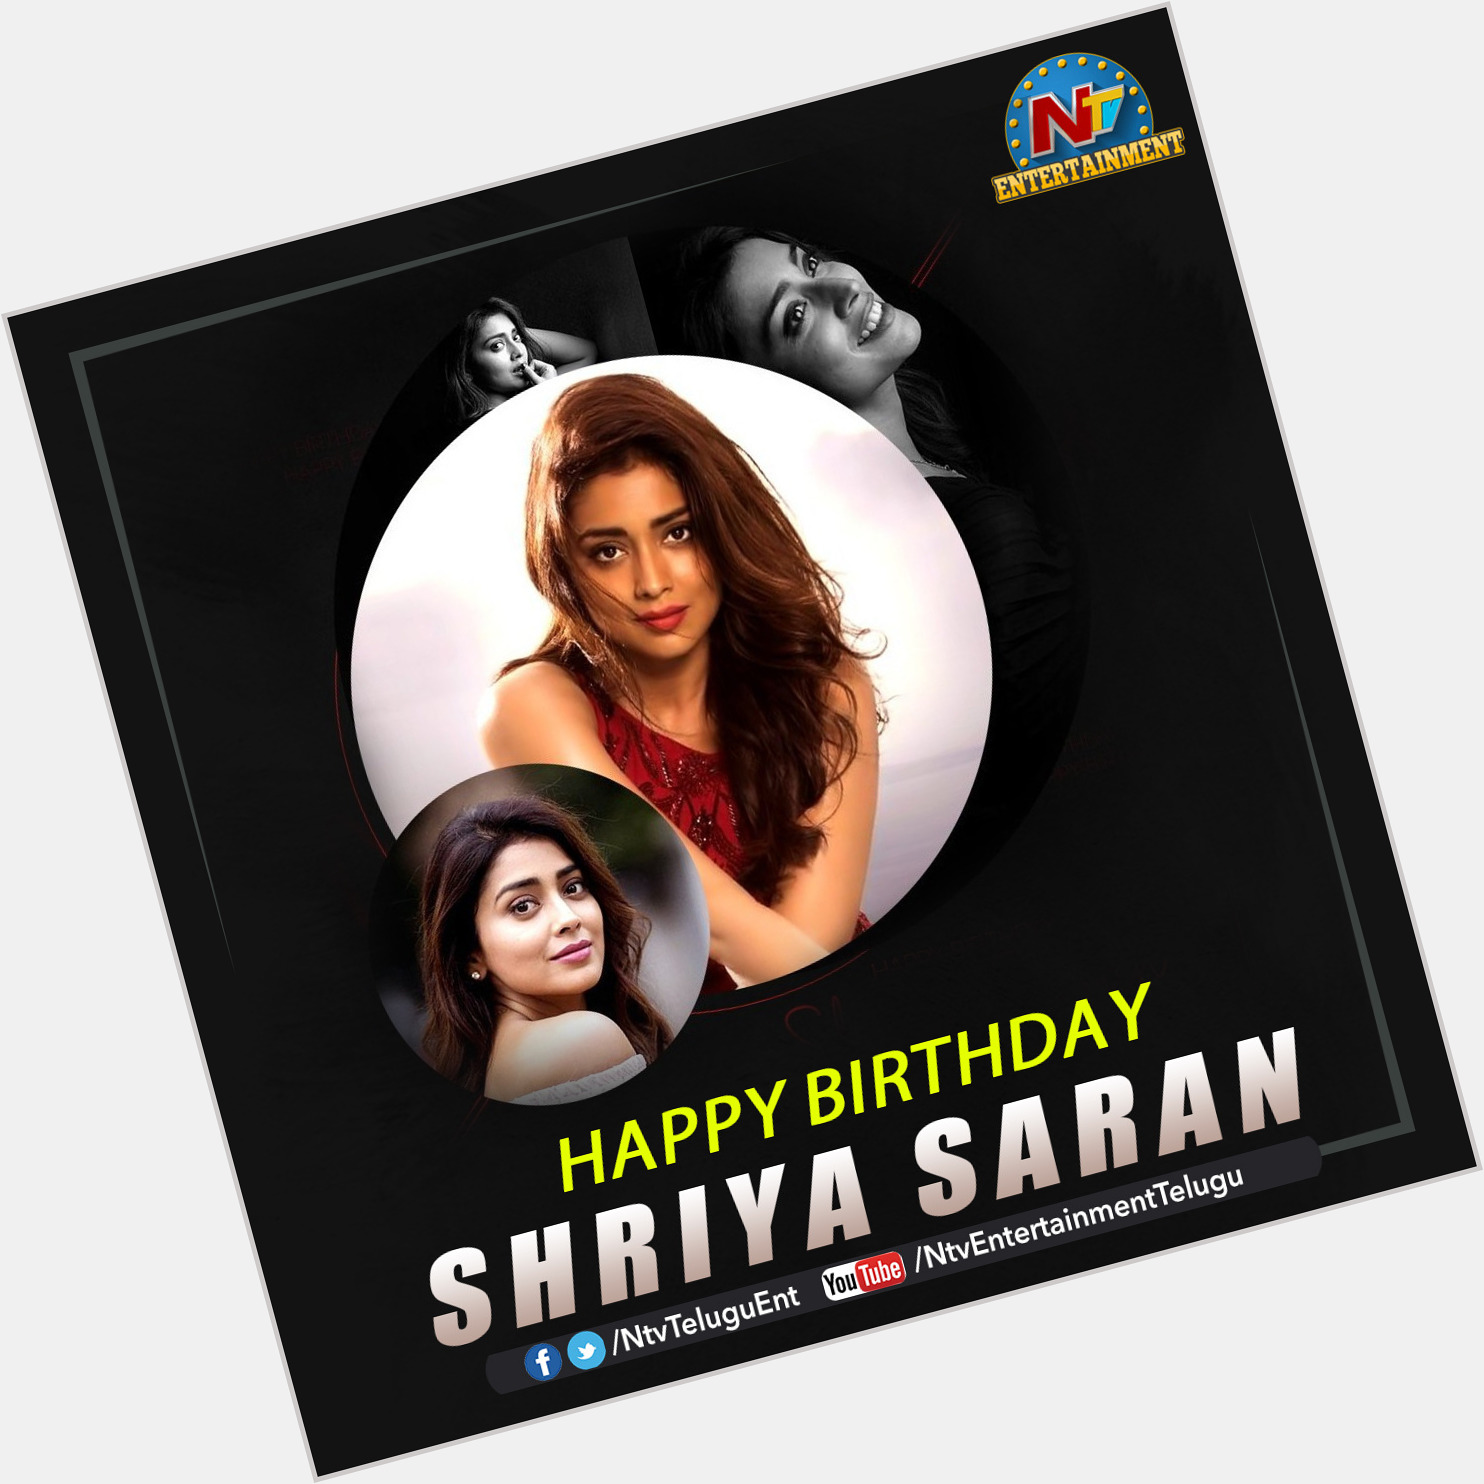 Wishing Shriya Saran a Very Happy Birthday!     